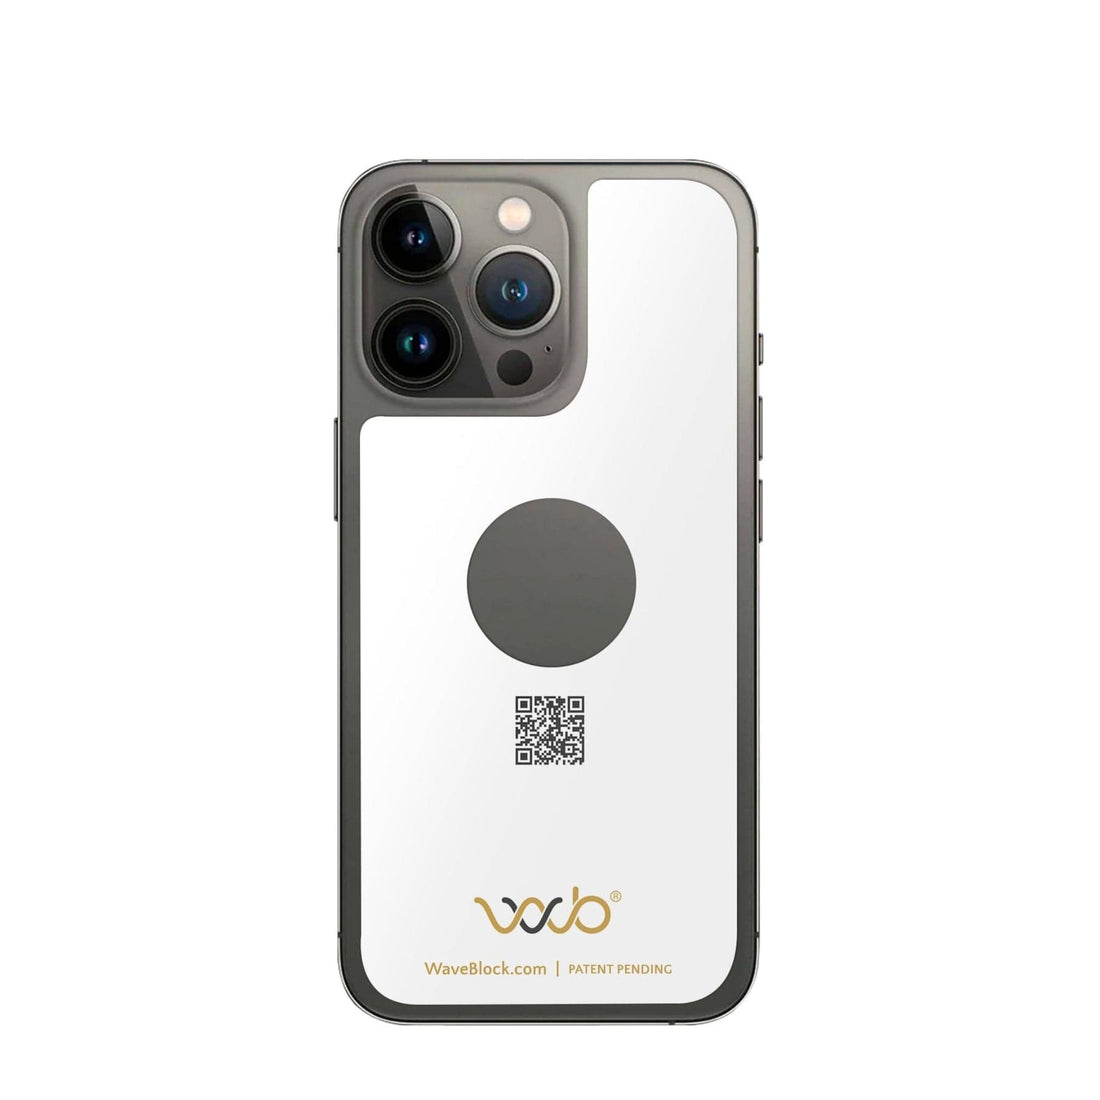 WaveBlock™ iProtect  EMF Blocking Cell Phone Sticker